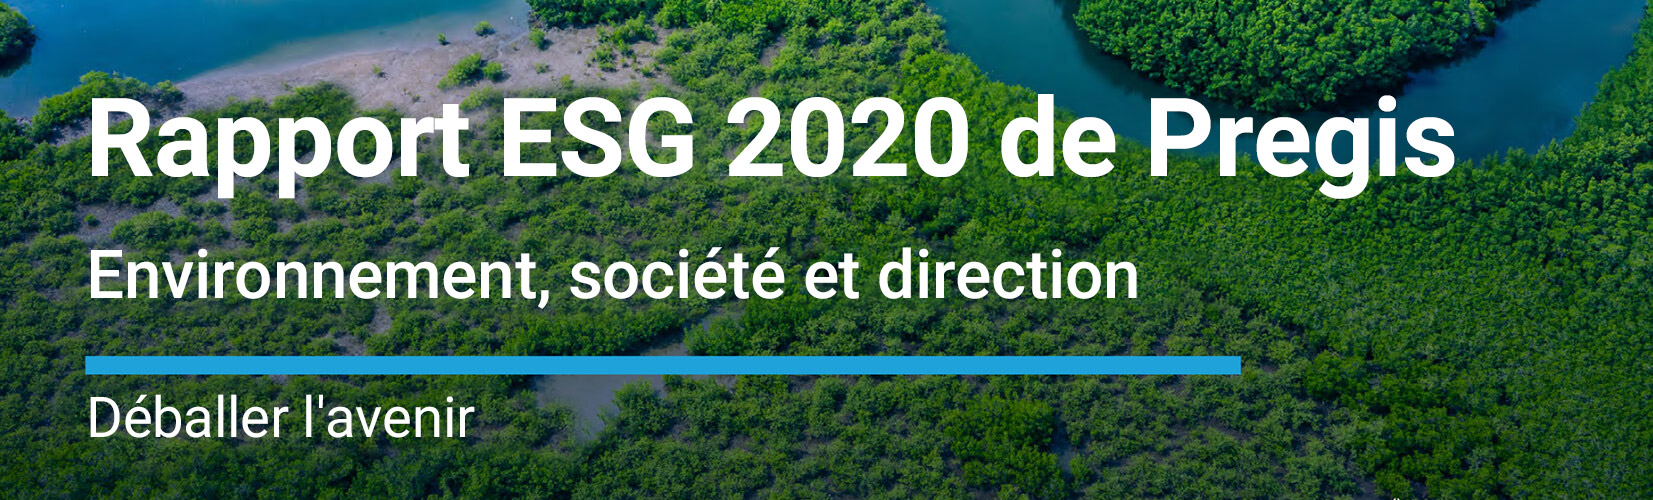 Rapport ESG Pregis 2020